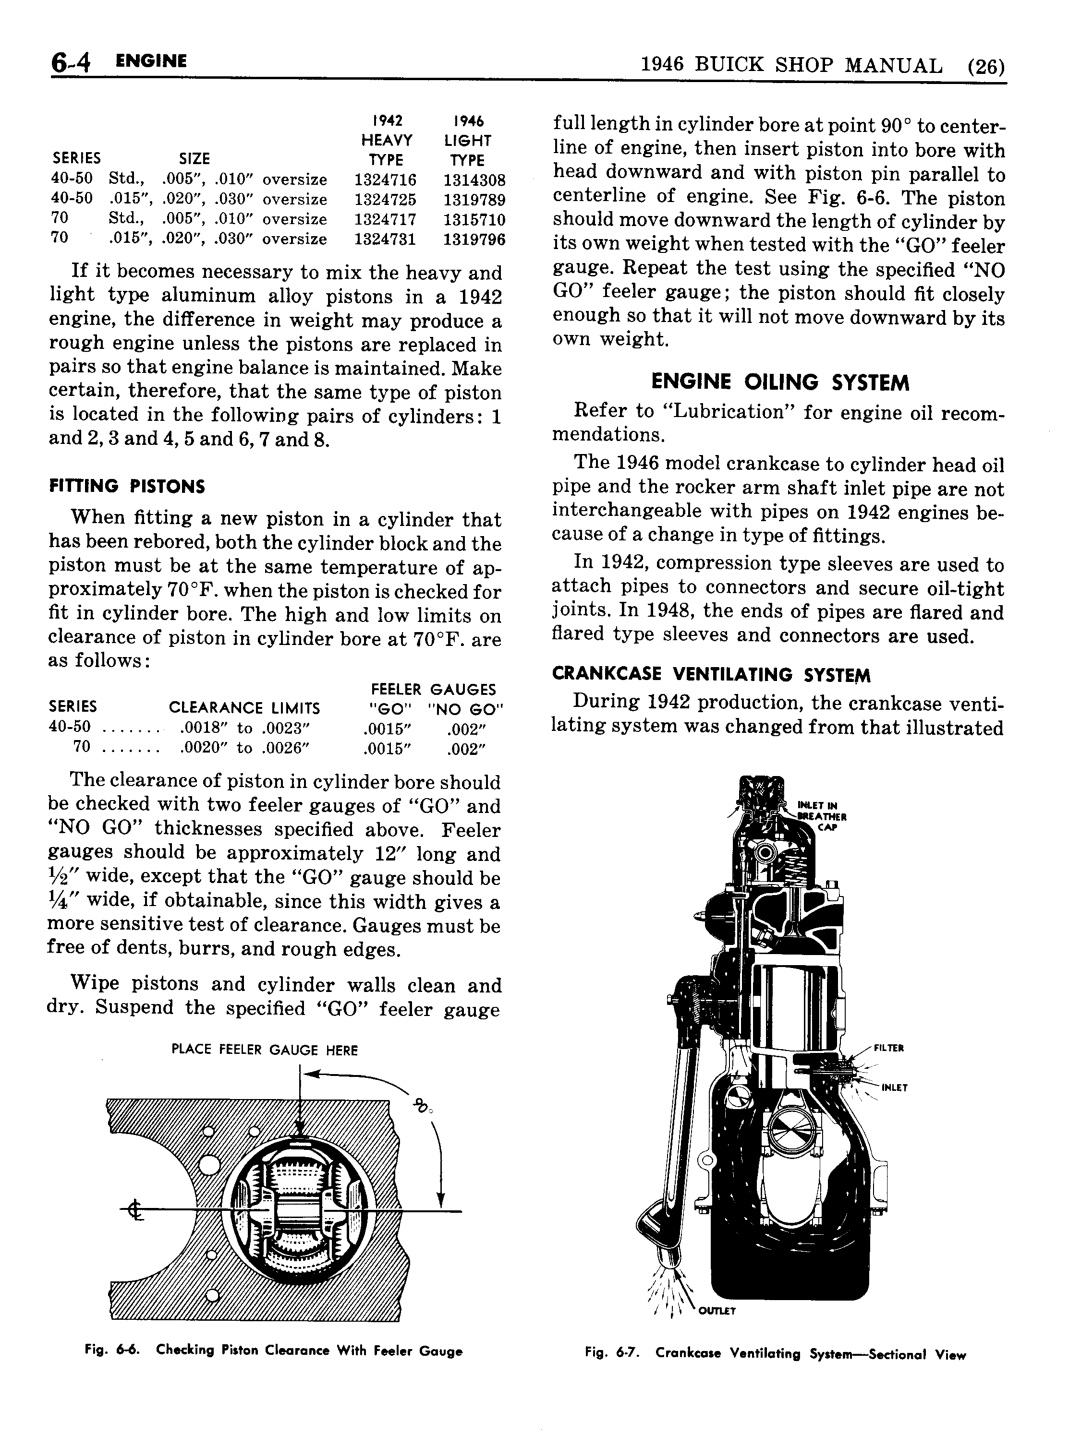 n_07 1946 Buick Shop Manual - Engine-004-004.jpg